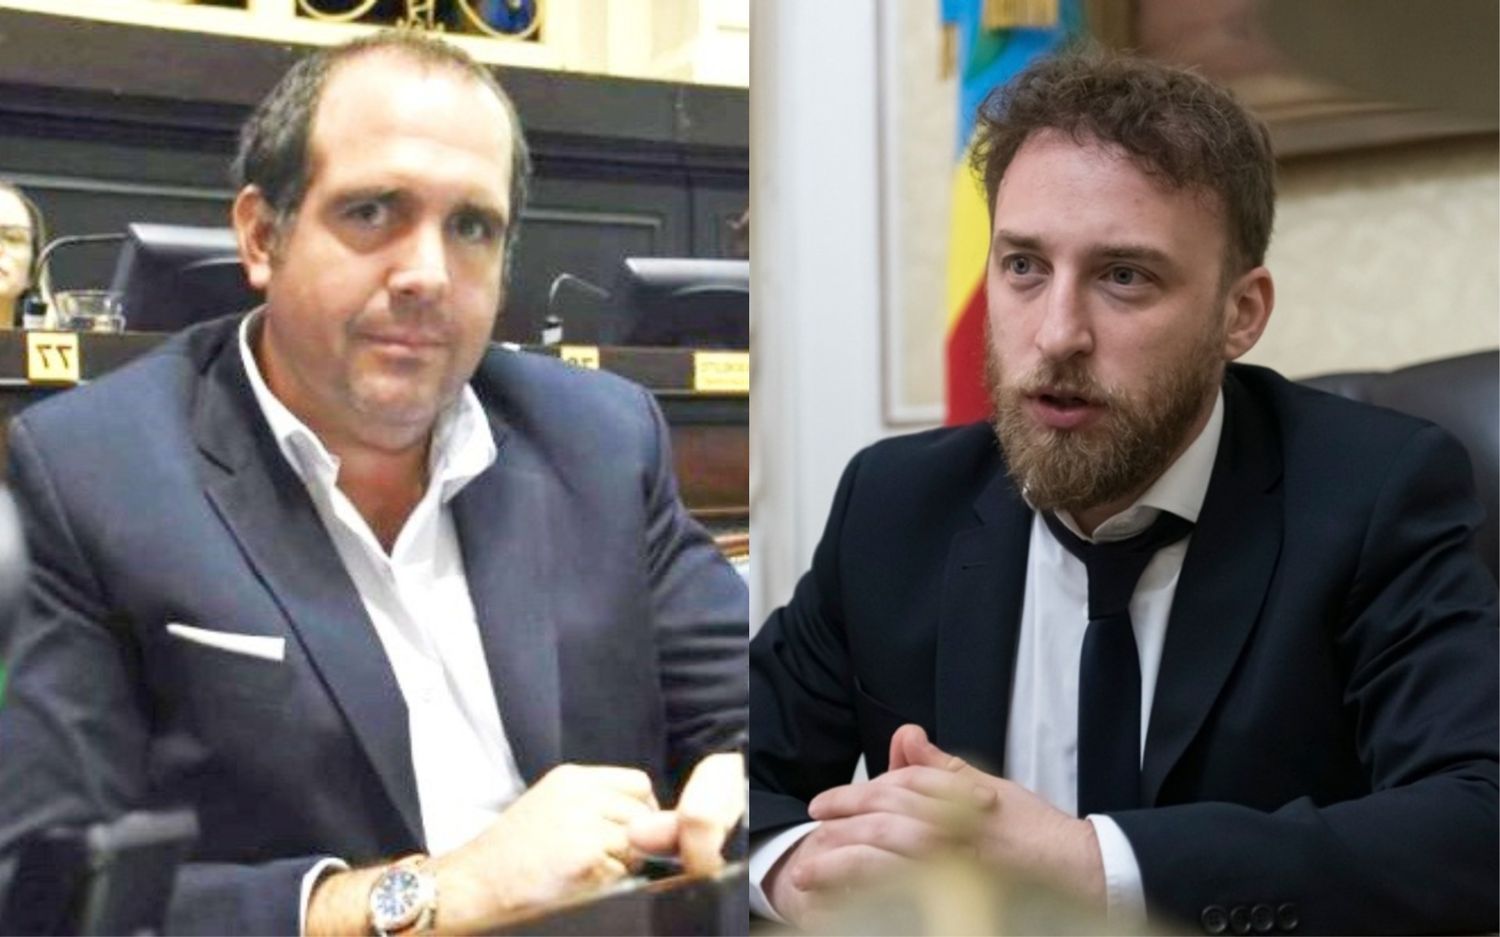 Durísimo cruce en redes entre Luciano Bugallo y Federico Otermín: "Lo grande que te queda picantear por Twitter"